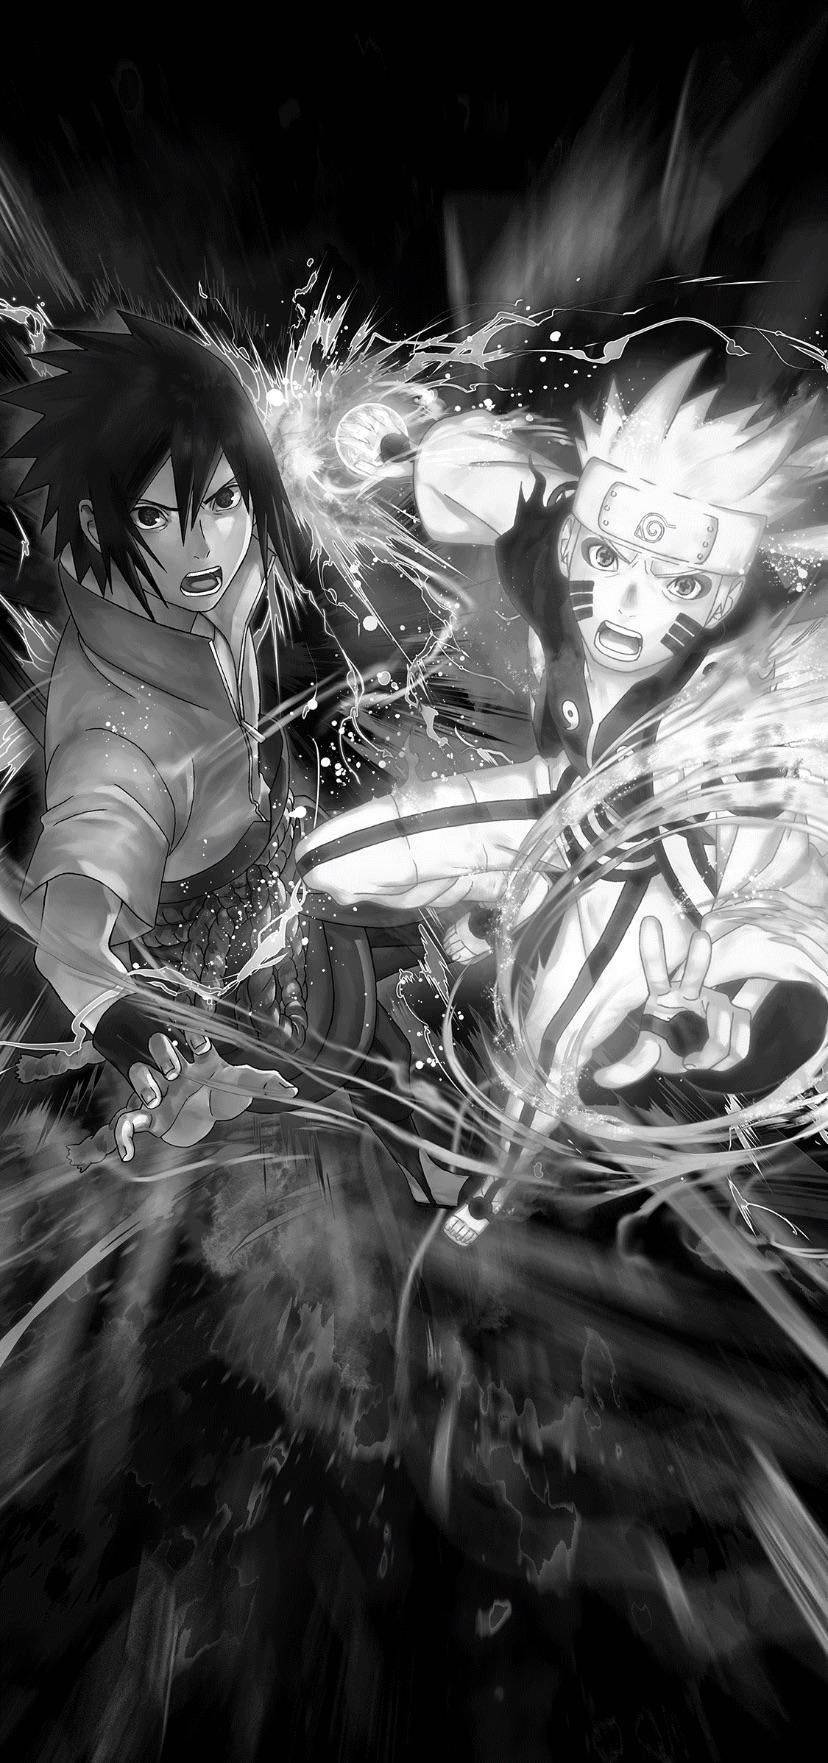 Download Naruto And Sasuke Anime Black And White Iphone Wallpaper |  